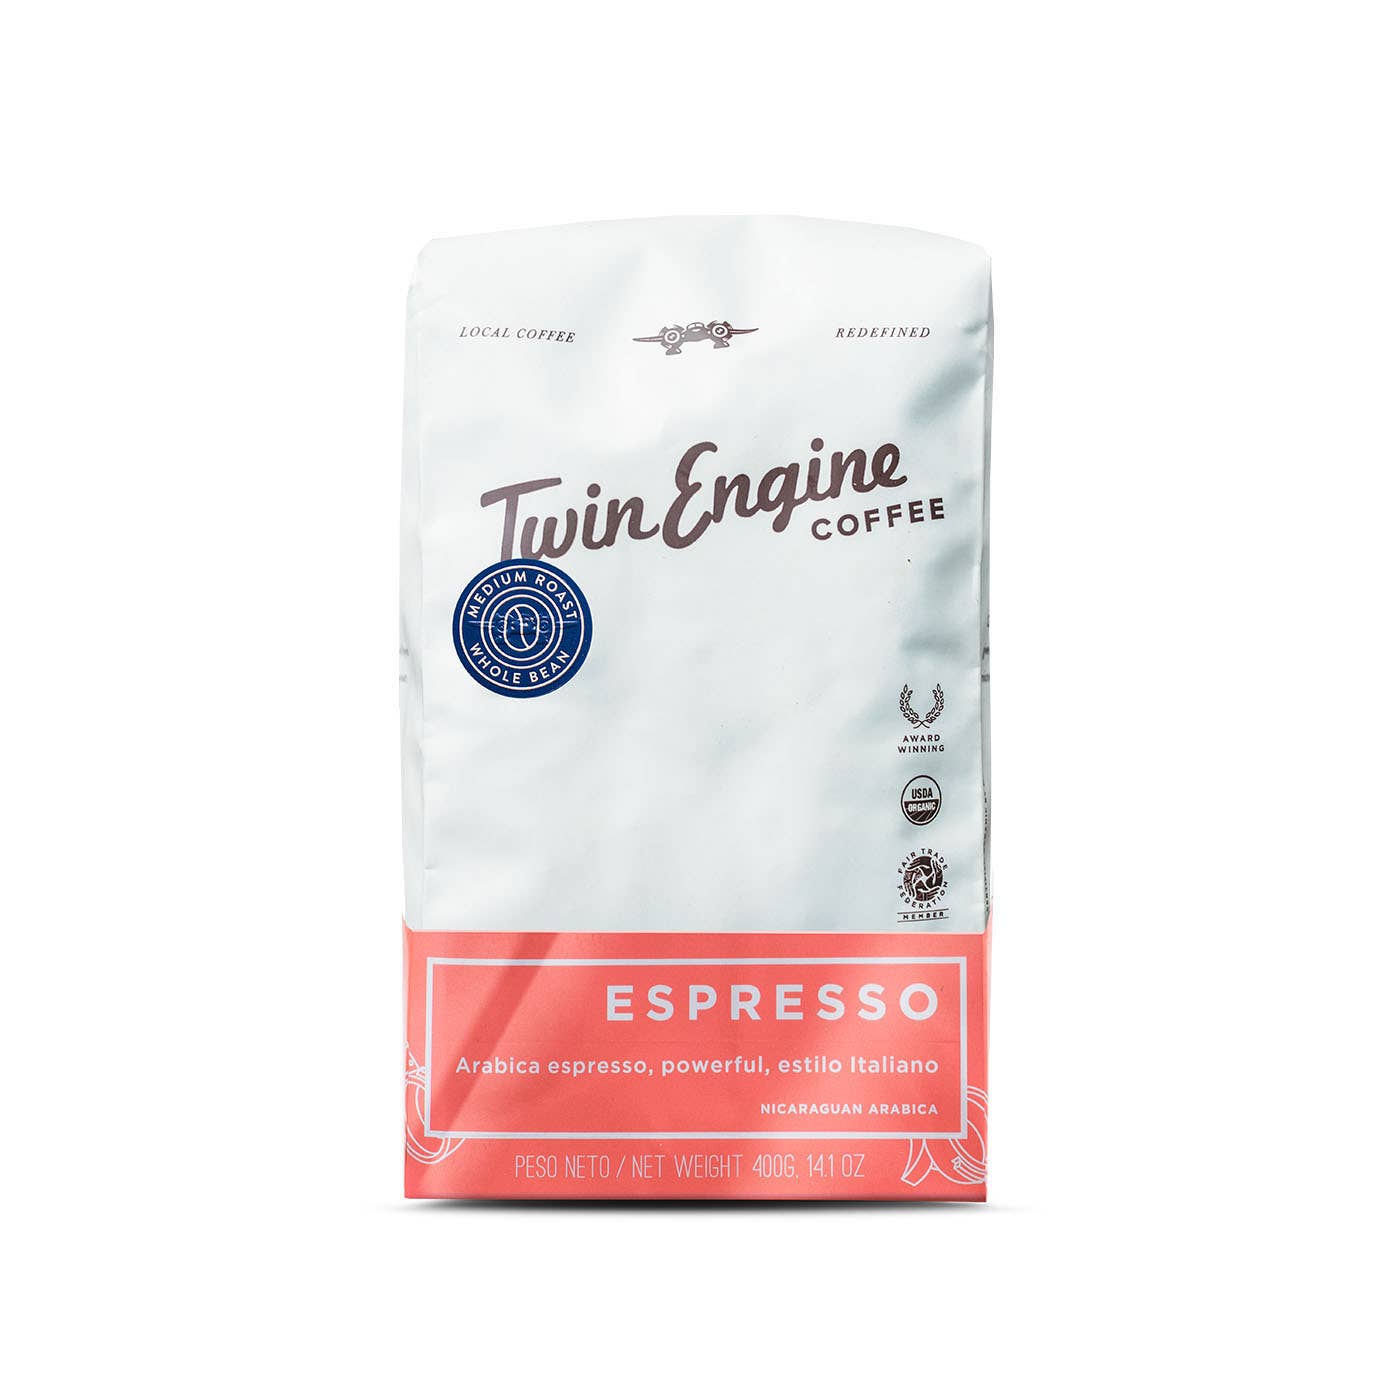 Espresso - Organic Fair Trade Coffee Home Goods Twin Engine Coffee   